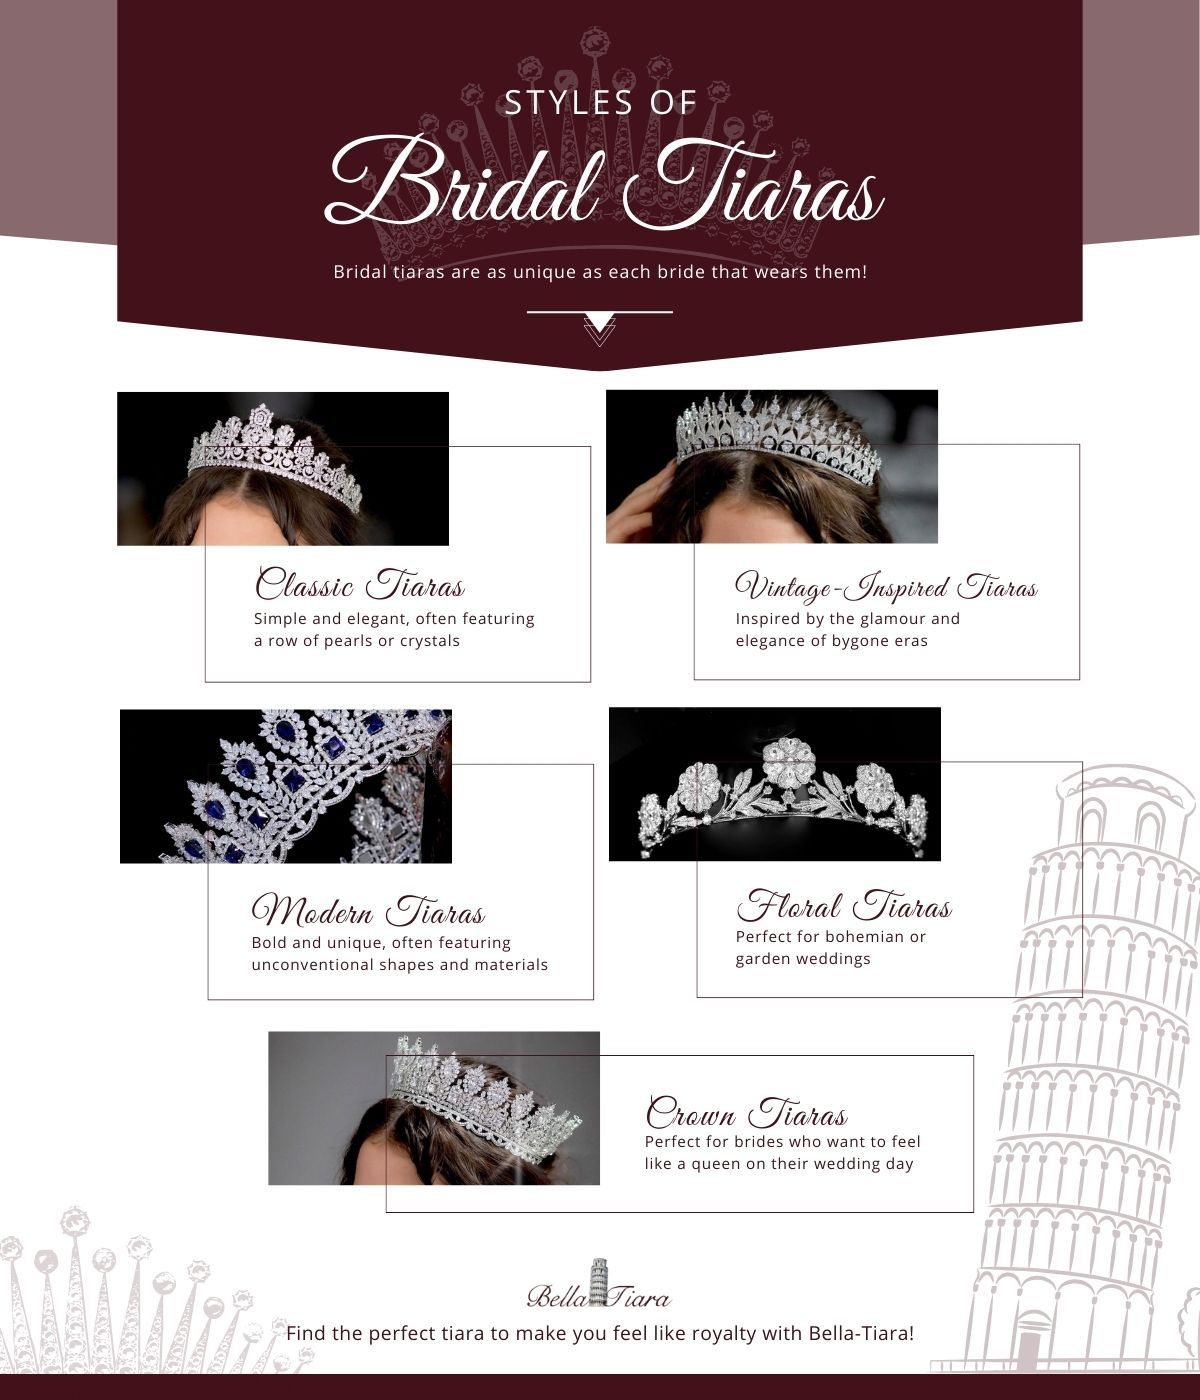 styles of bridal tiaras infographic